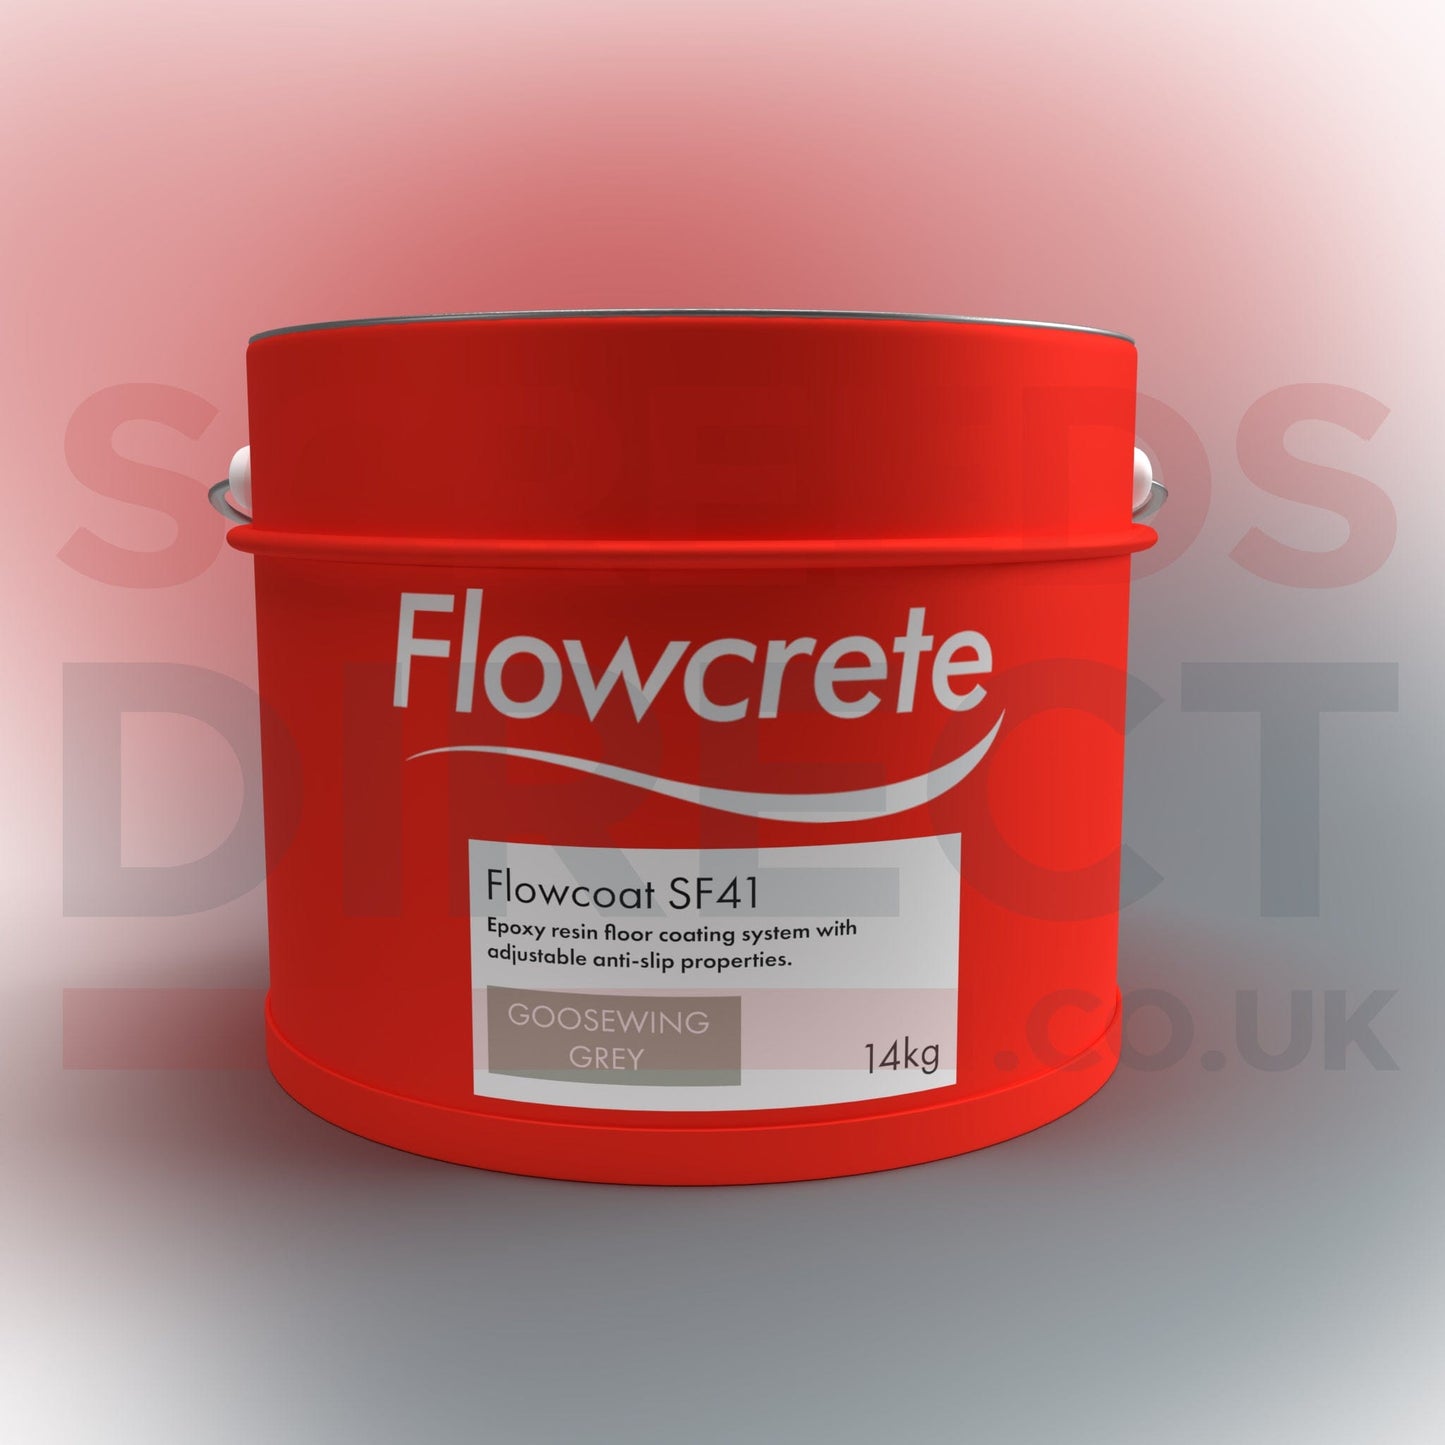 Flowcrete Building Materials Epoxy Floor Coat - Flowcrete SF41 Goosewing Grey 14kg